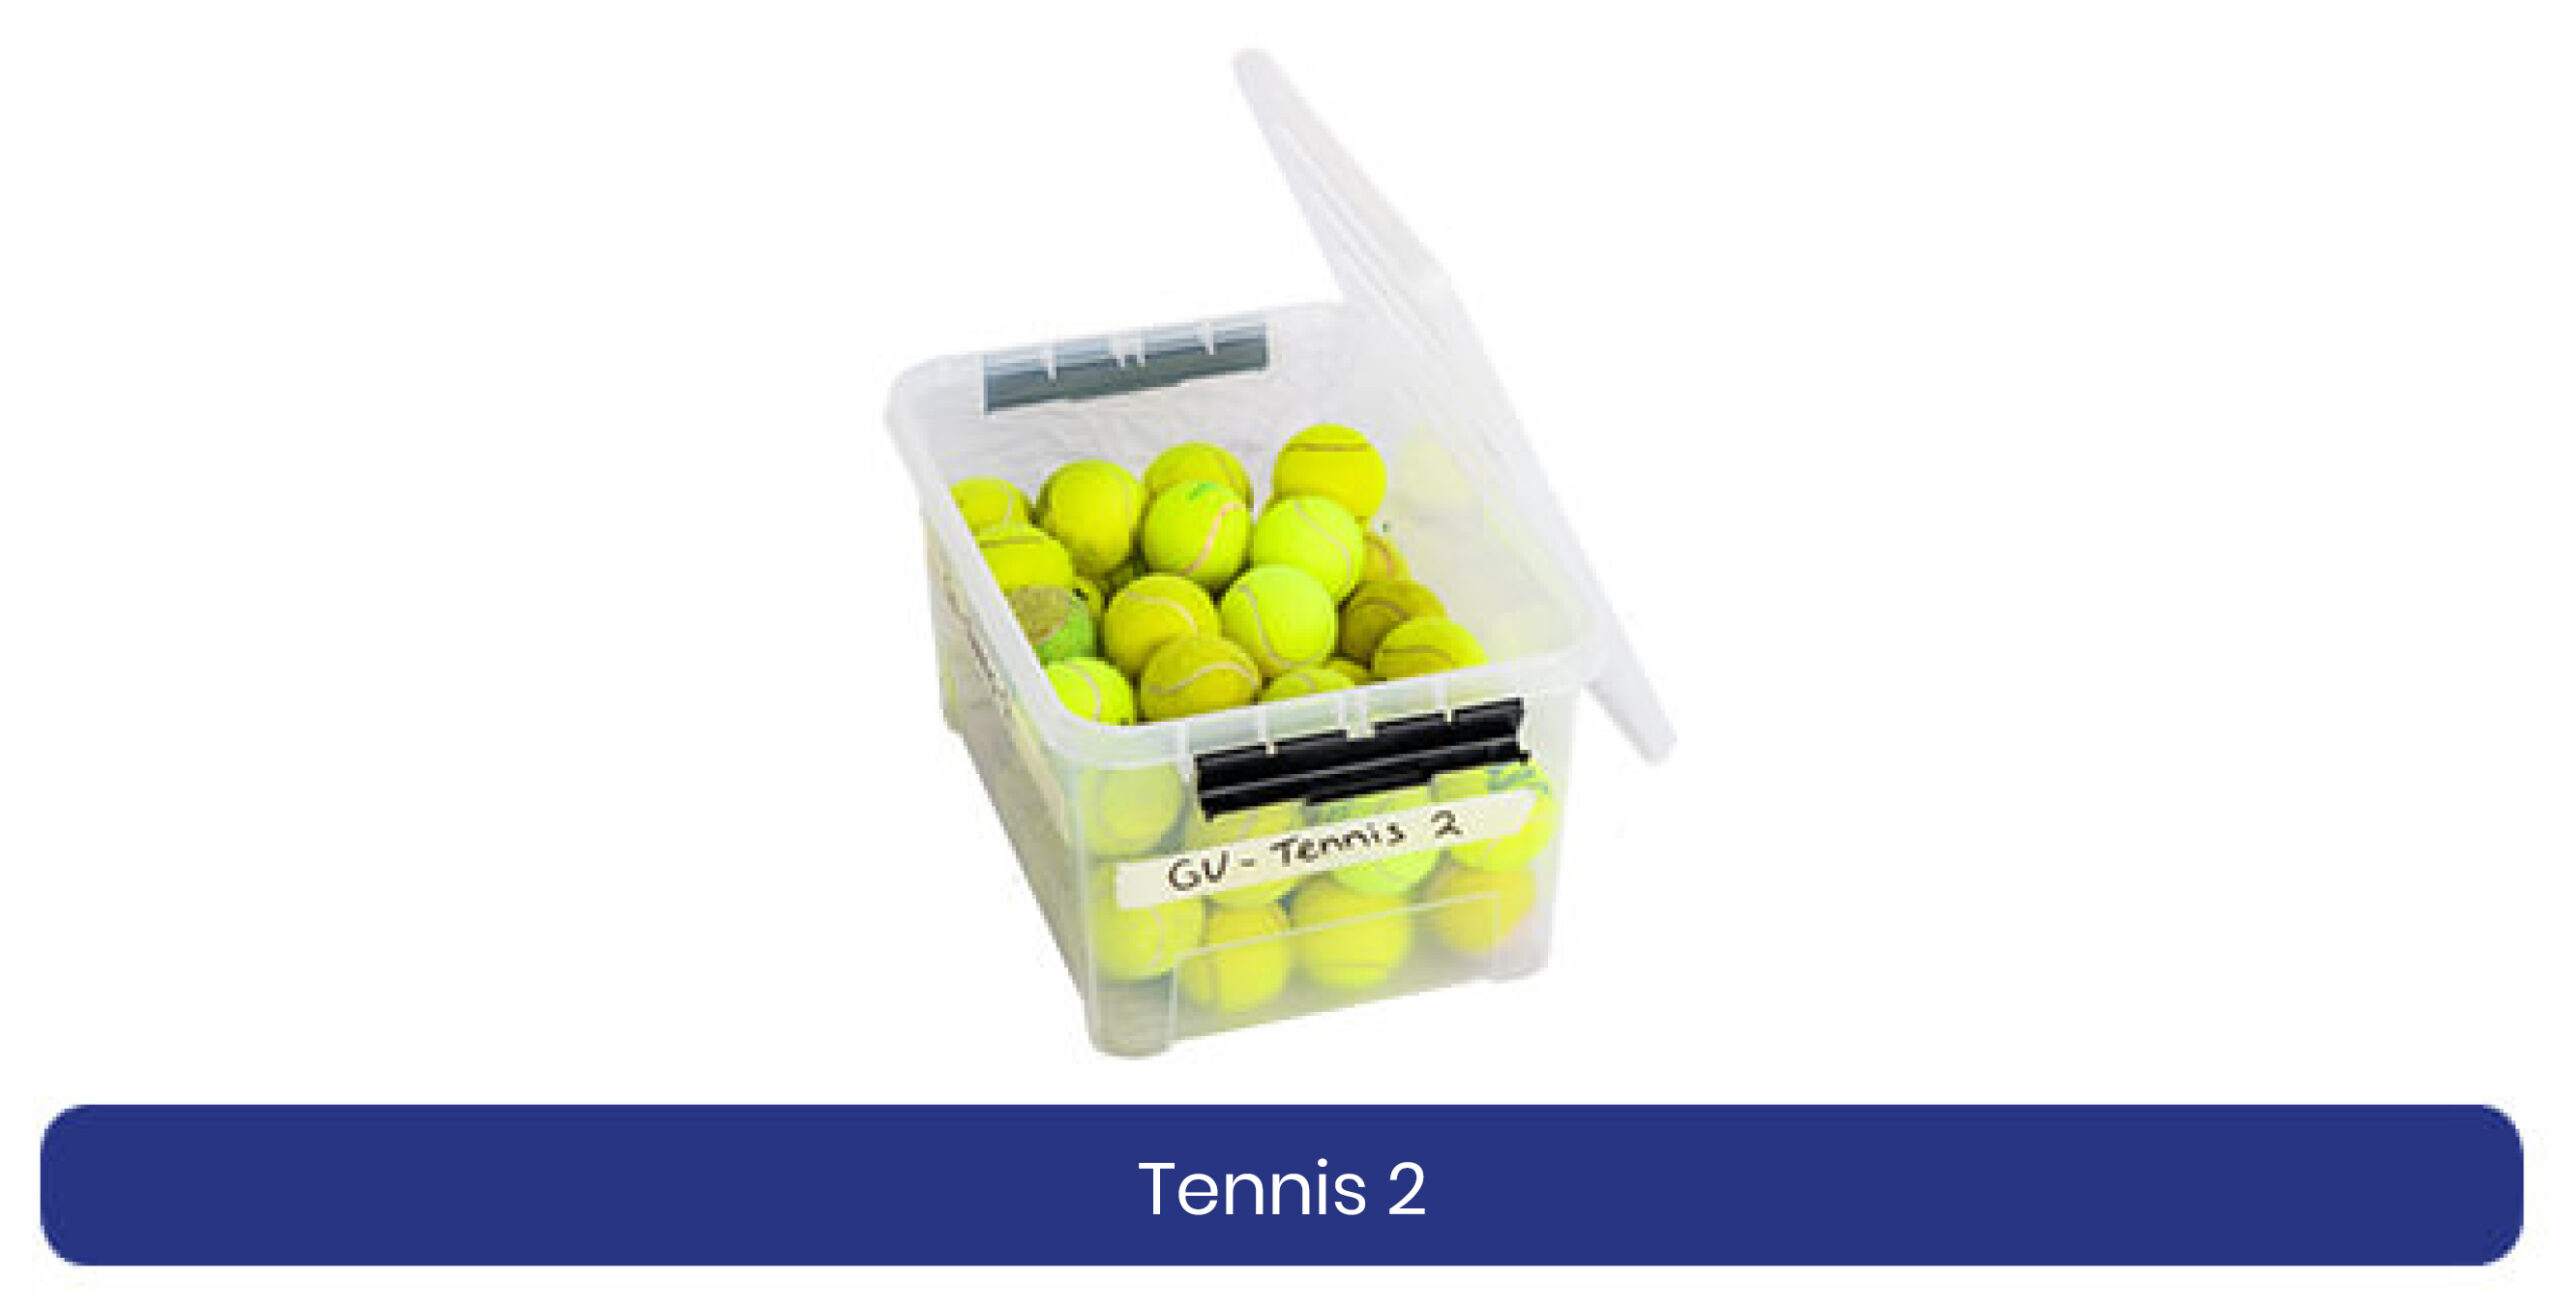 Tennis 2 lenen product